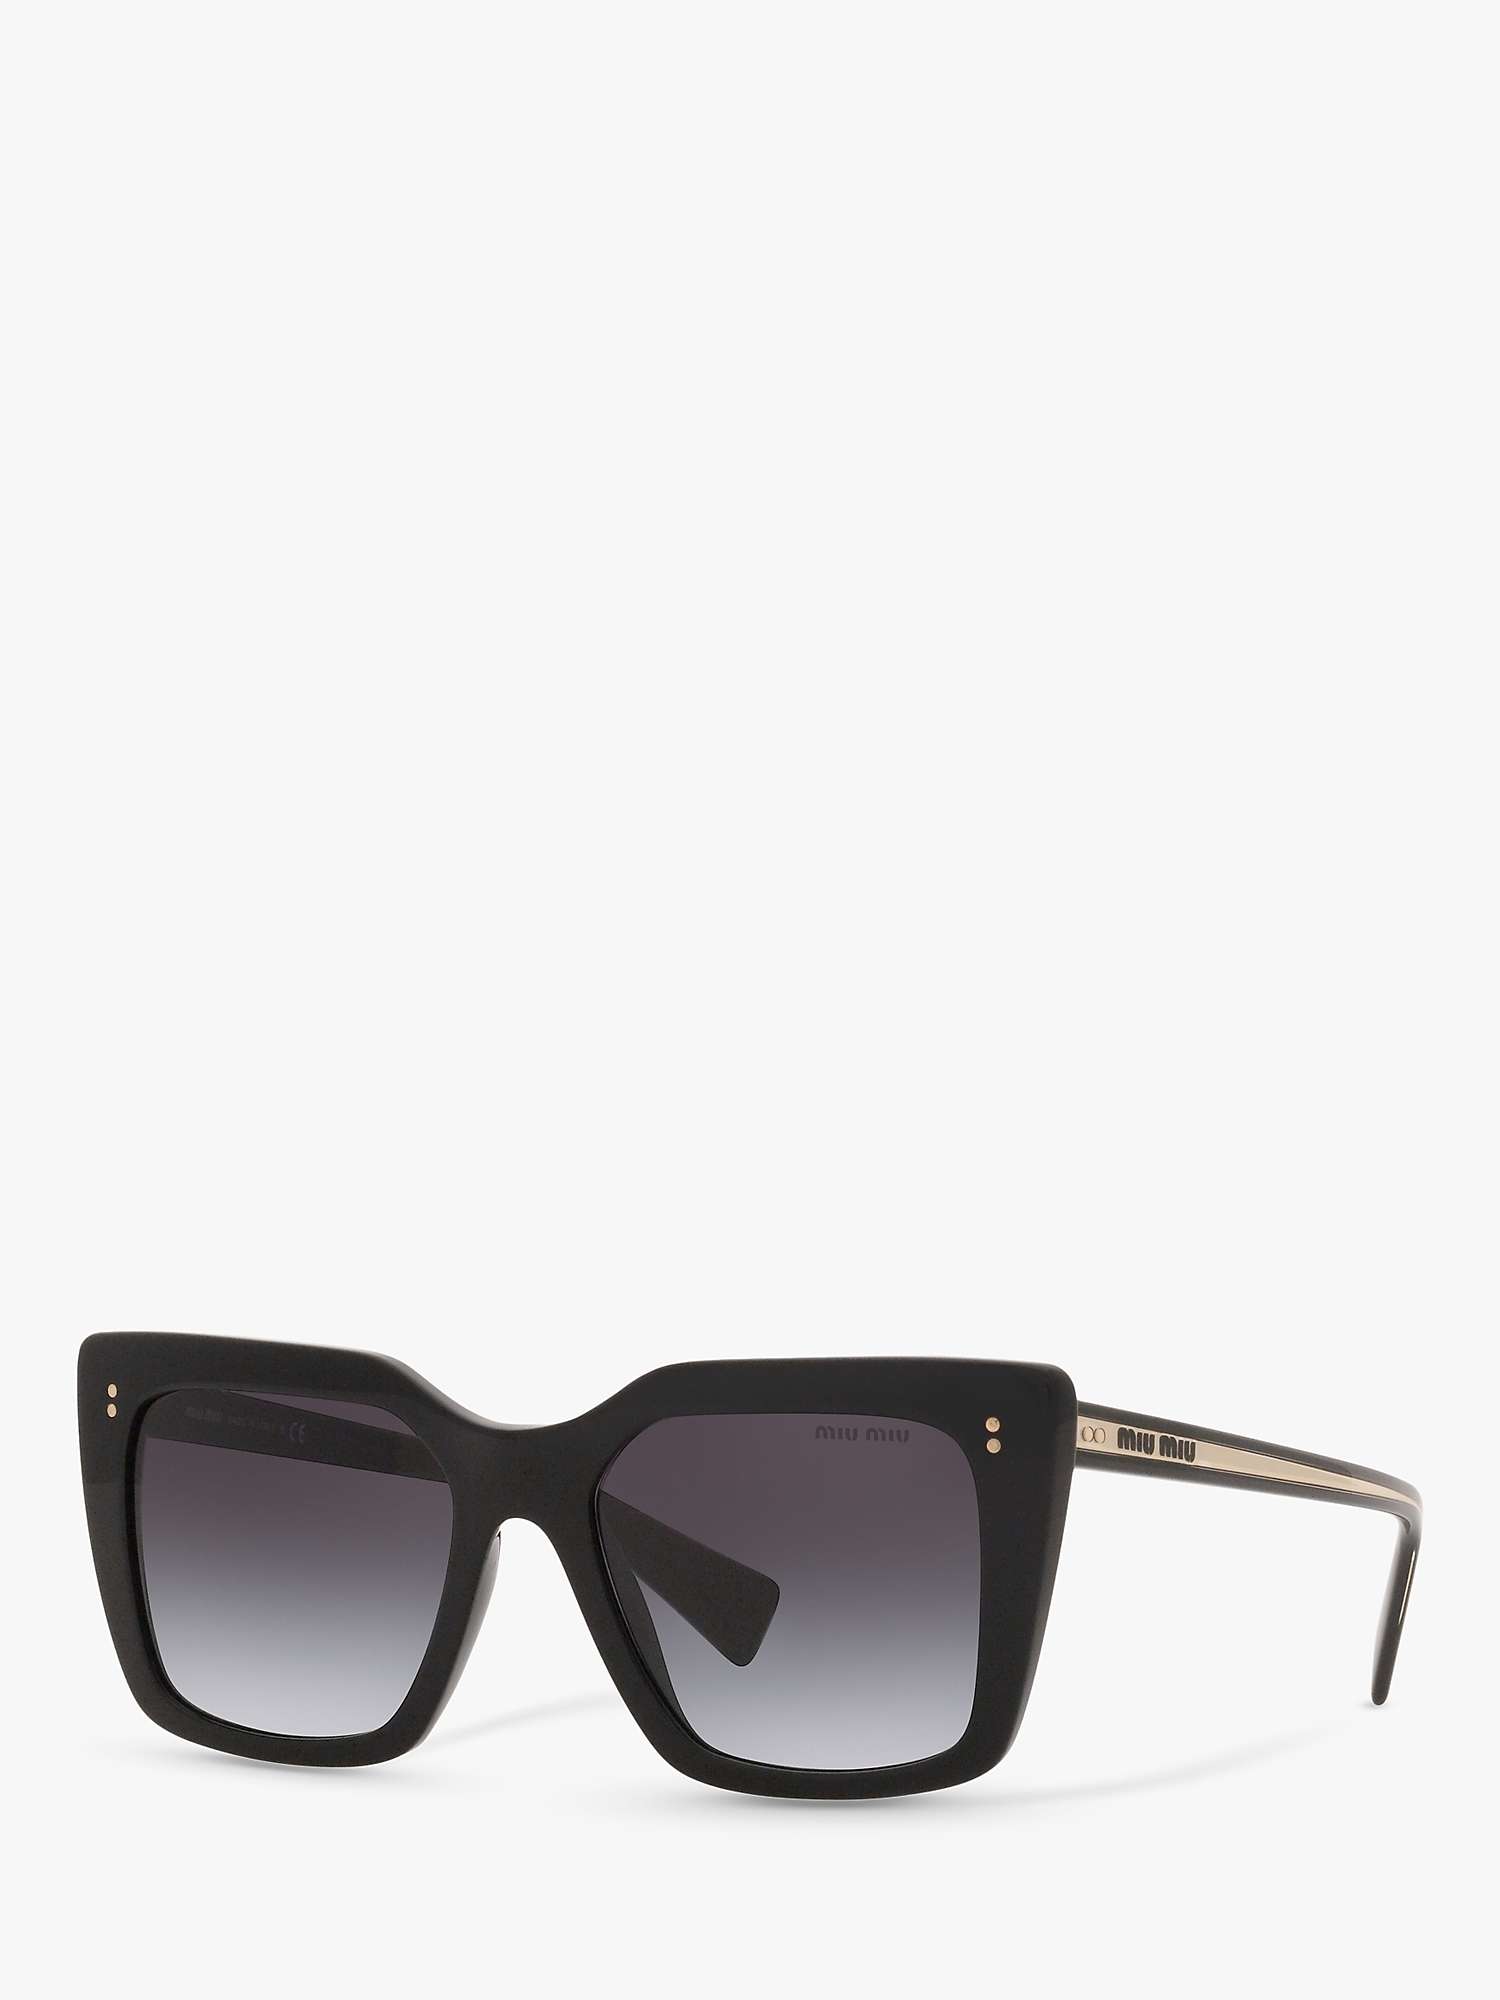 Buy Miu Miu MU 02WS Women's Square Sunglasses, Black/Grey Gradient Online at johnlewis.com